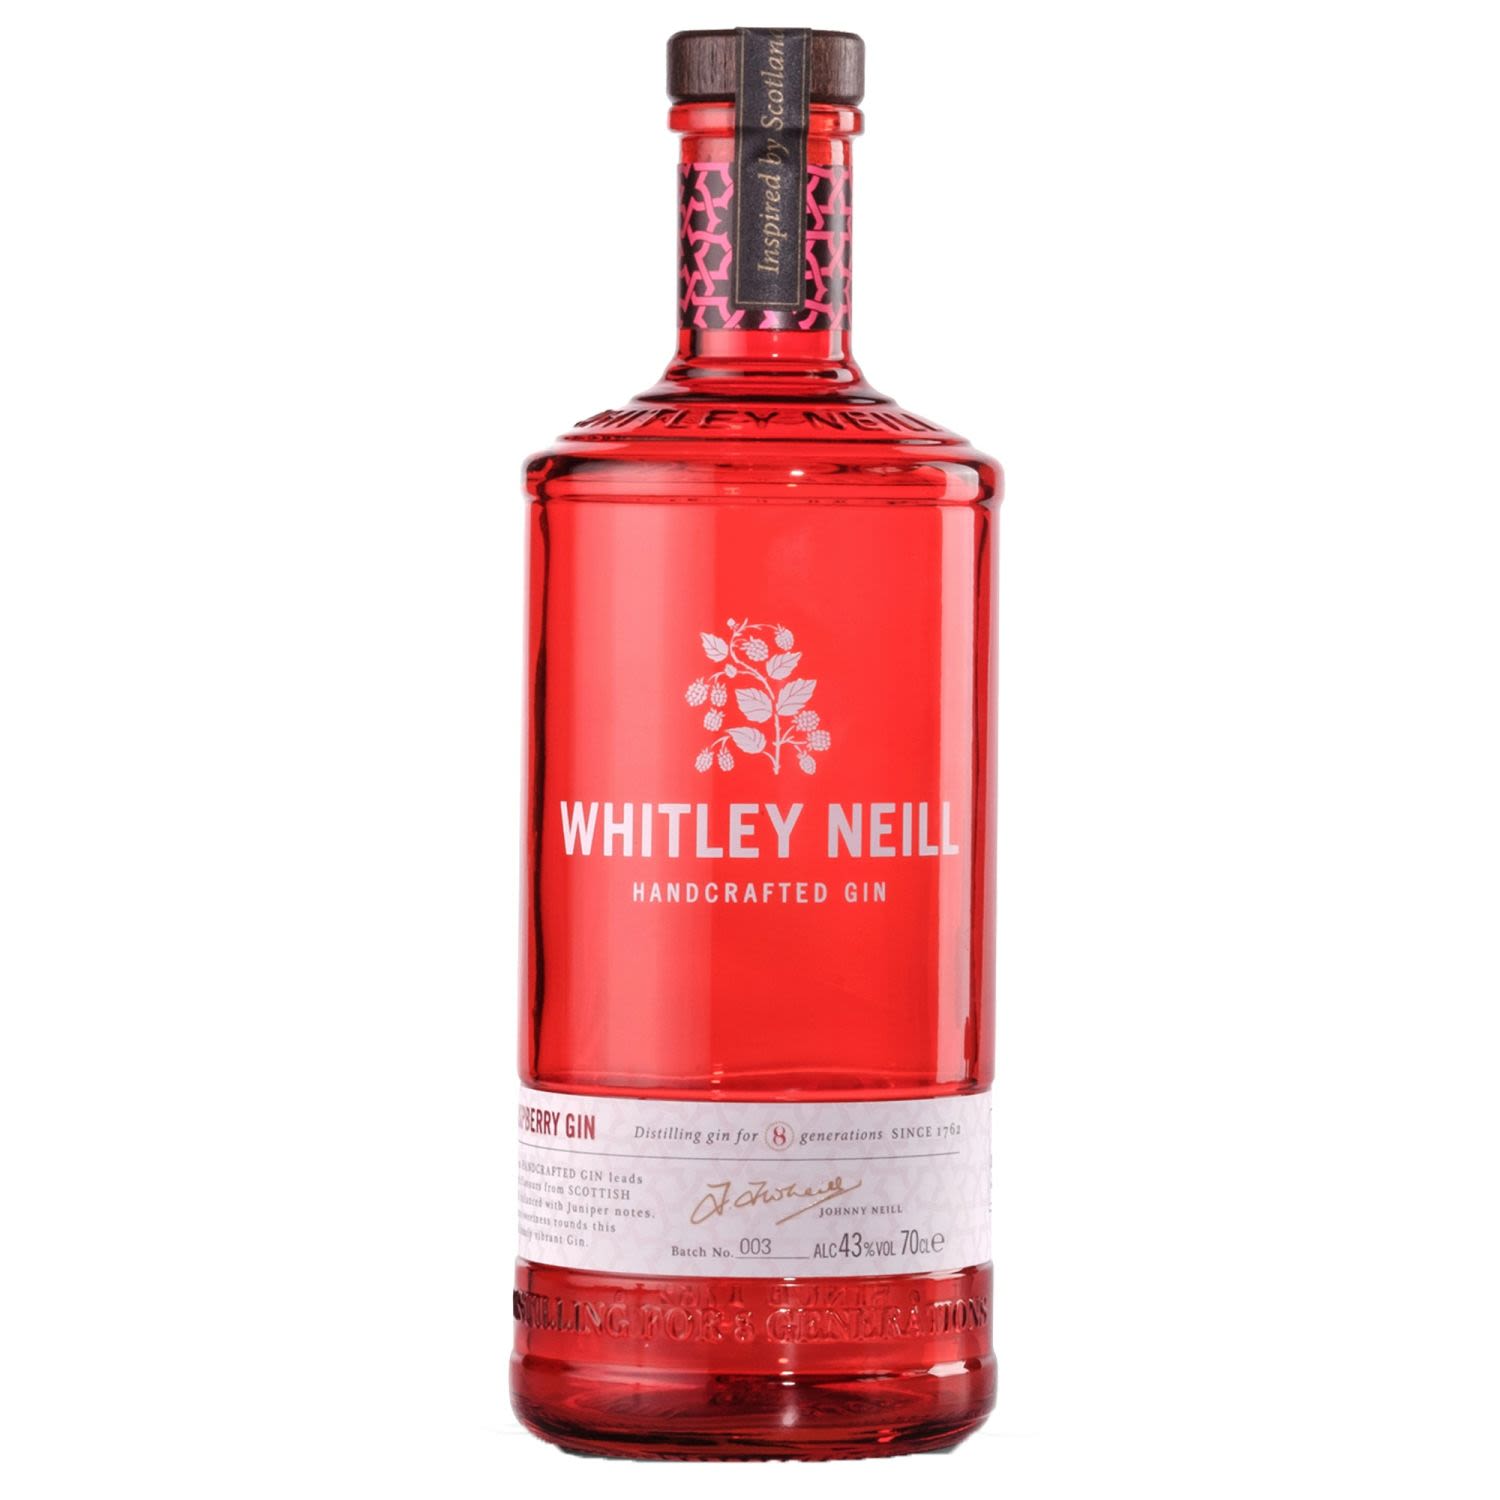 Whitley Neill Raspberry Gin 700mL Bottle